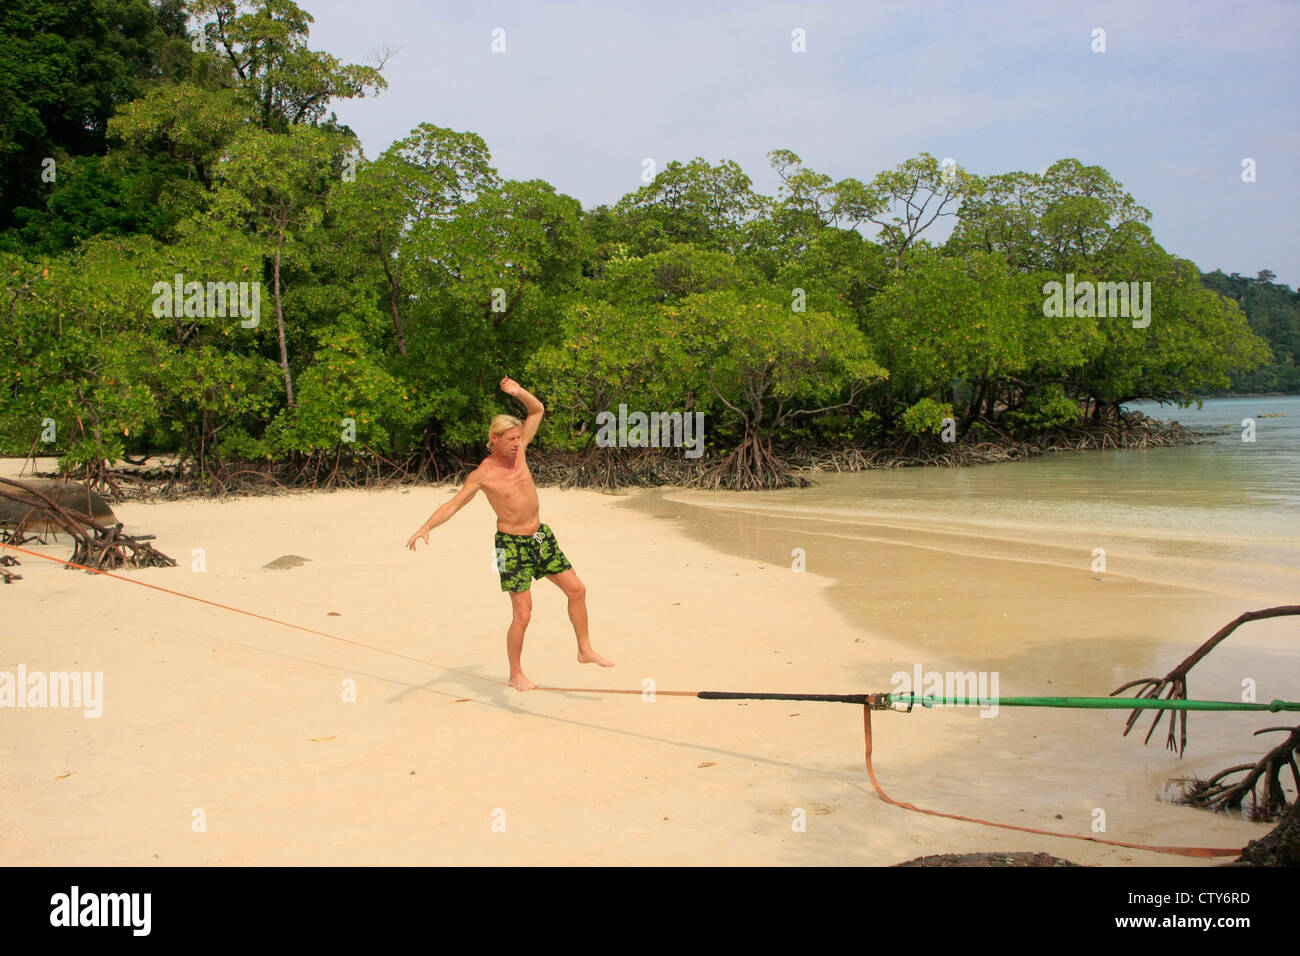 Man walking on tight rope at the beach, Ko Surin islands, Thailand Stock Photo